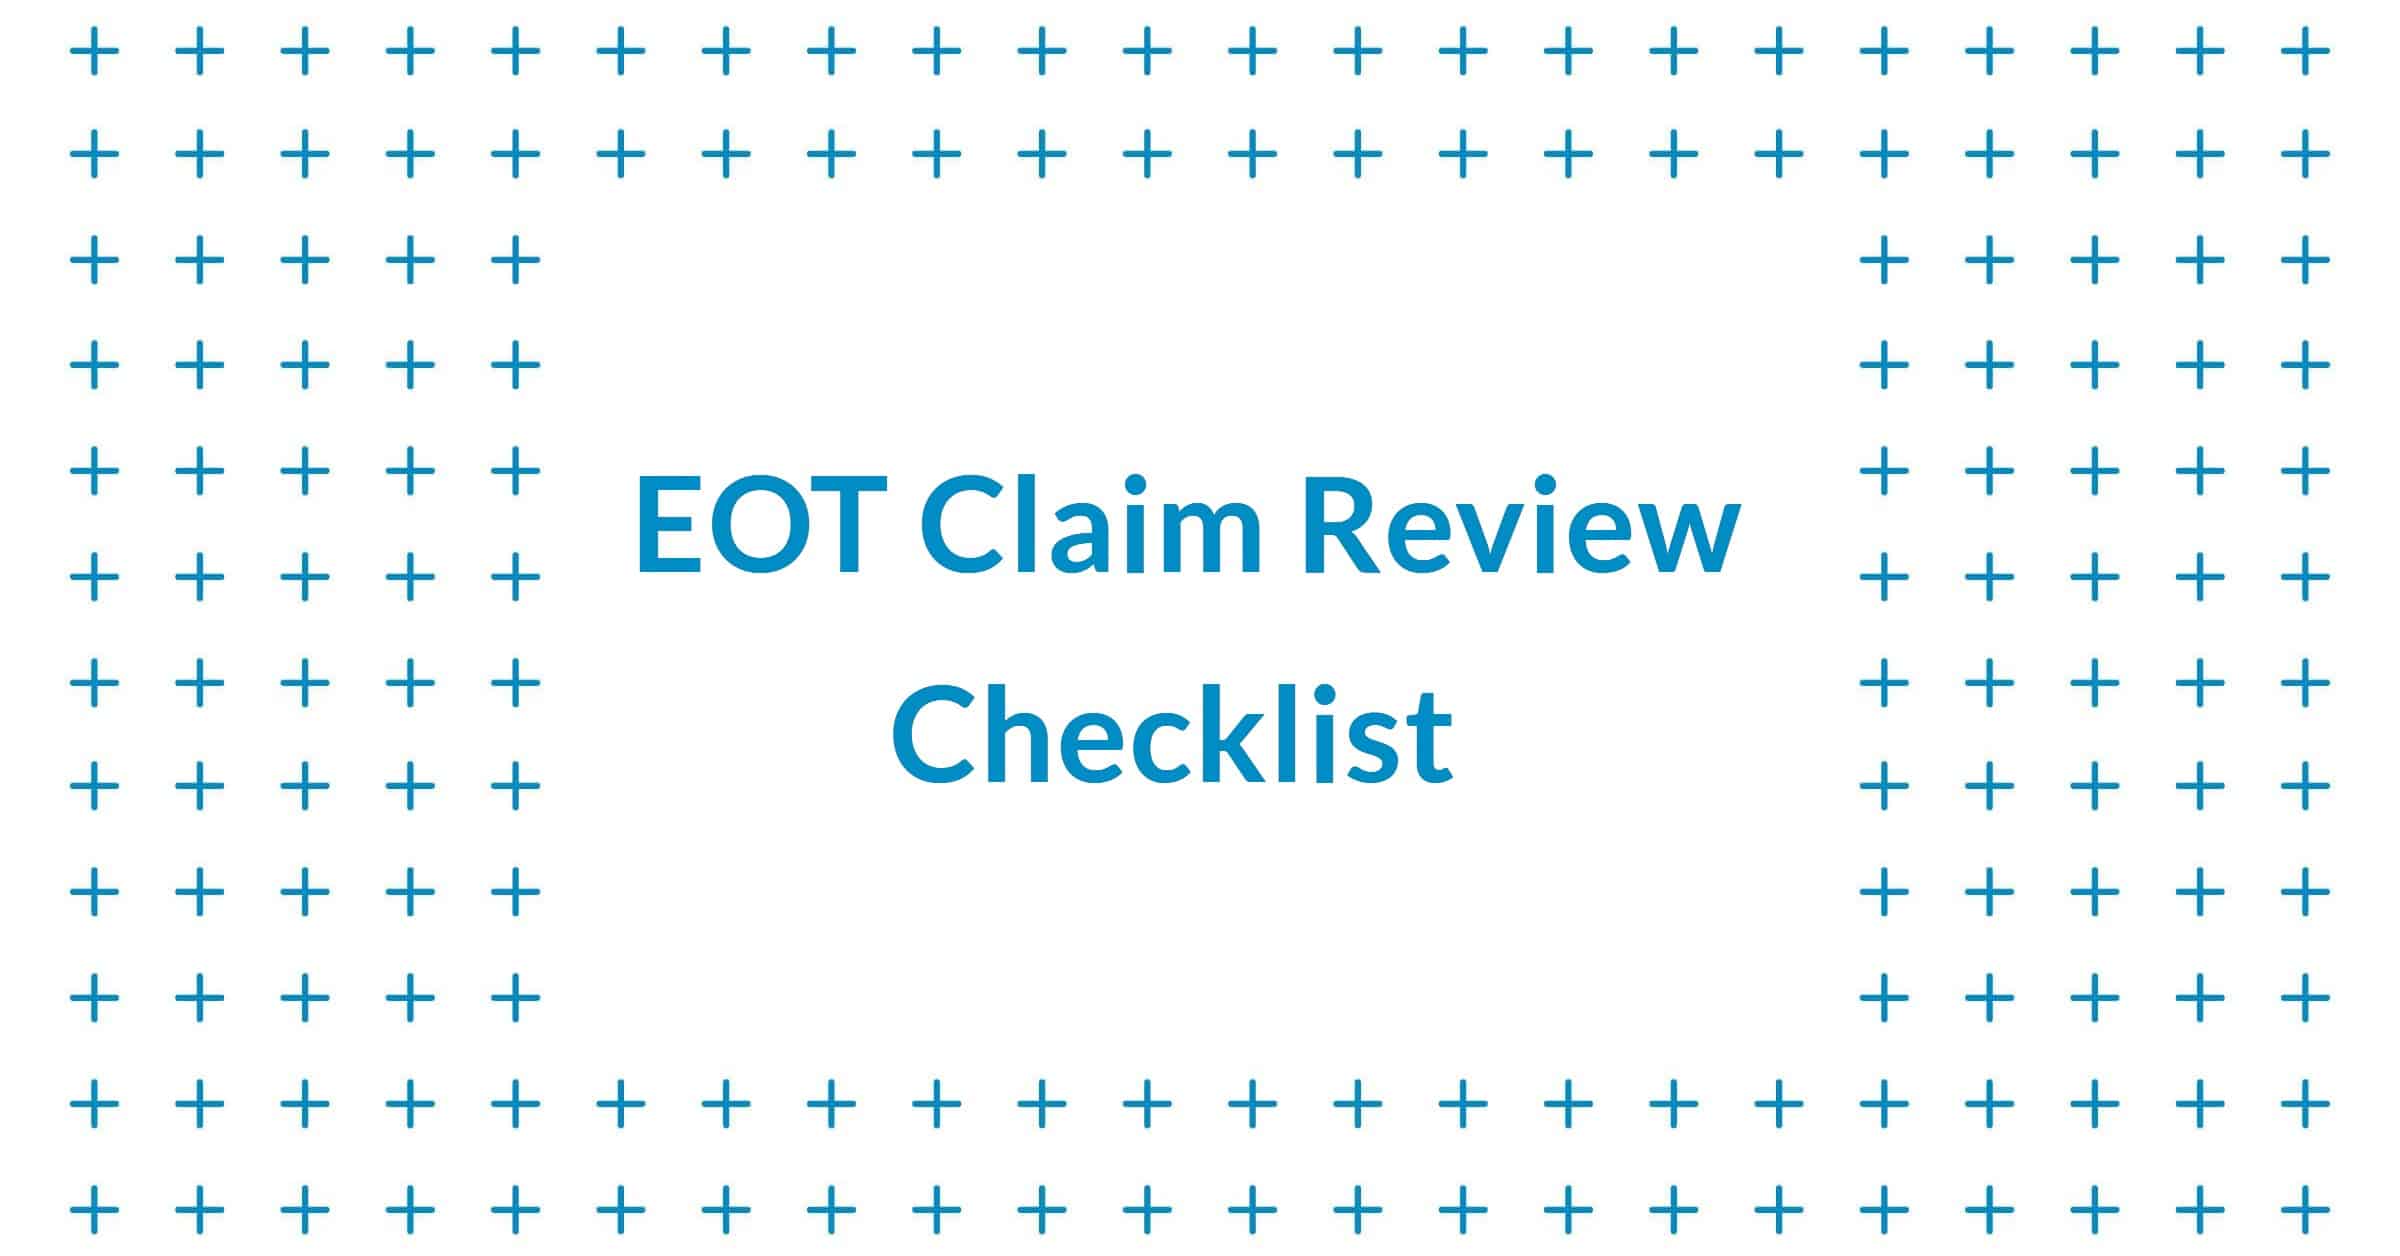 EOT Claim Review Checklist